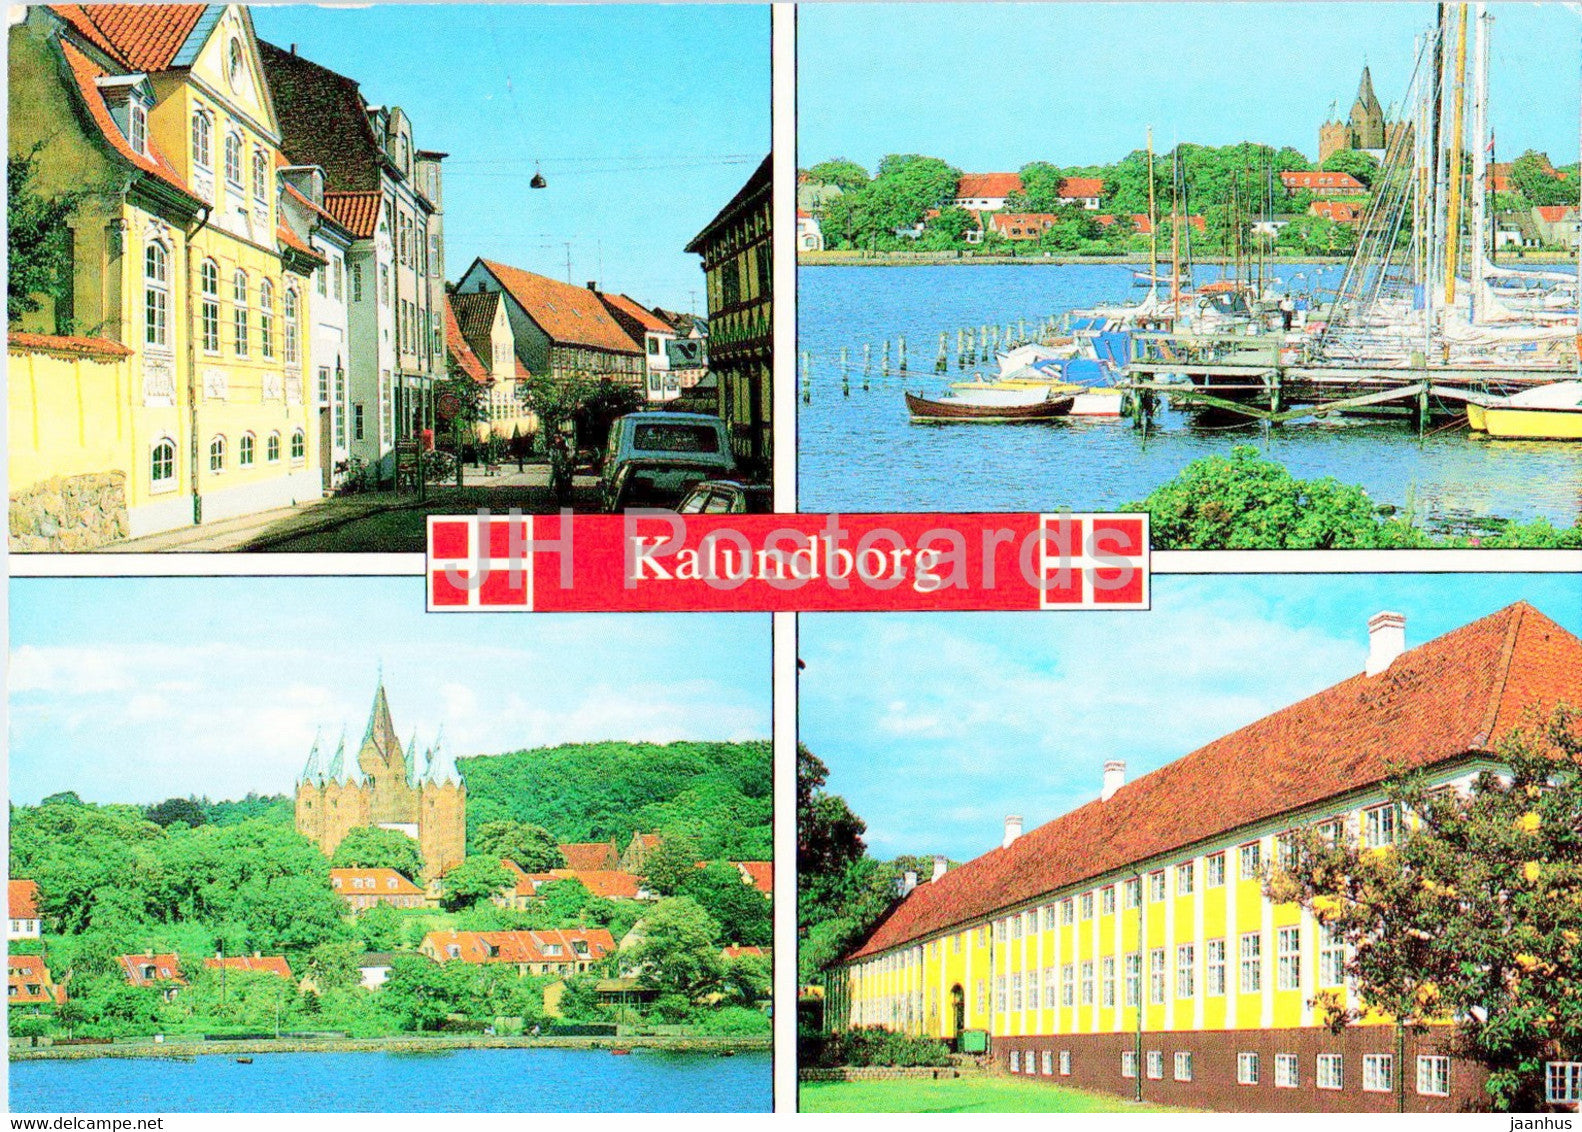 Kalundborg - town views - port - multiview - 1992 - Denmark - used - JH Postcards